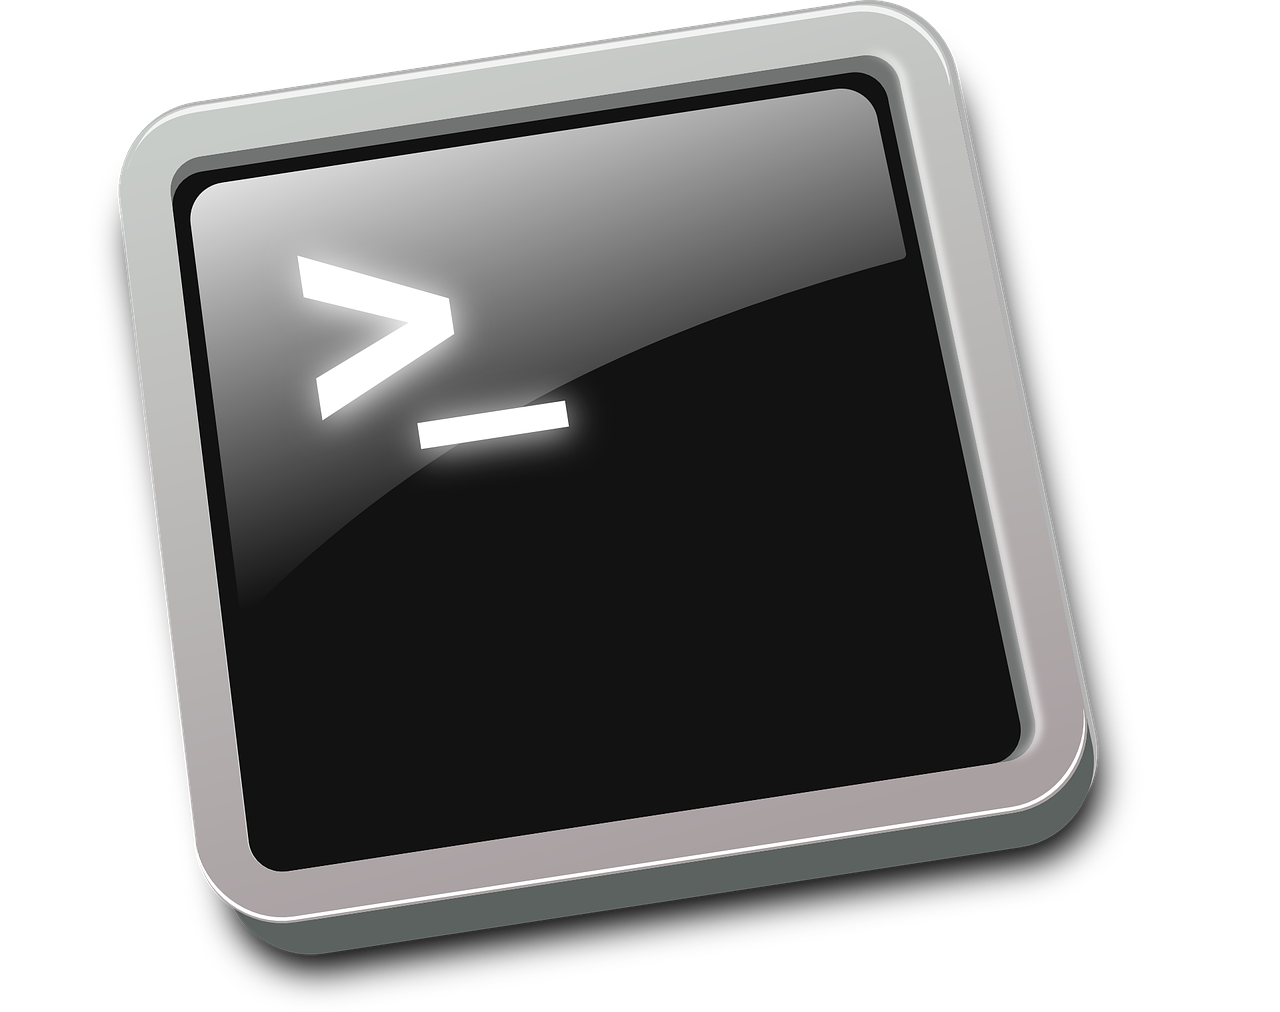 bash command-line linux free photo